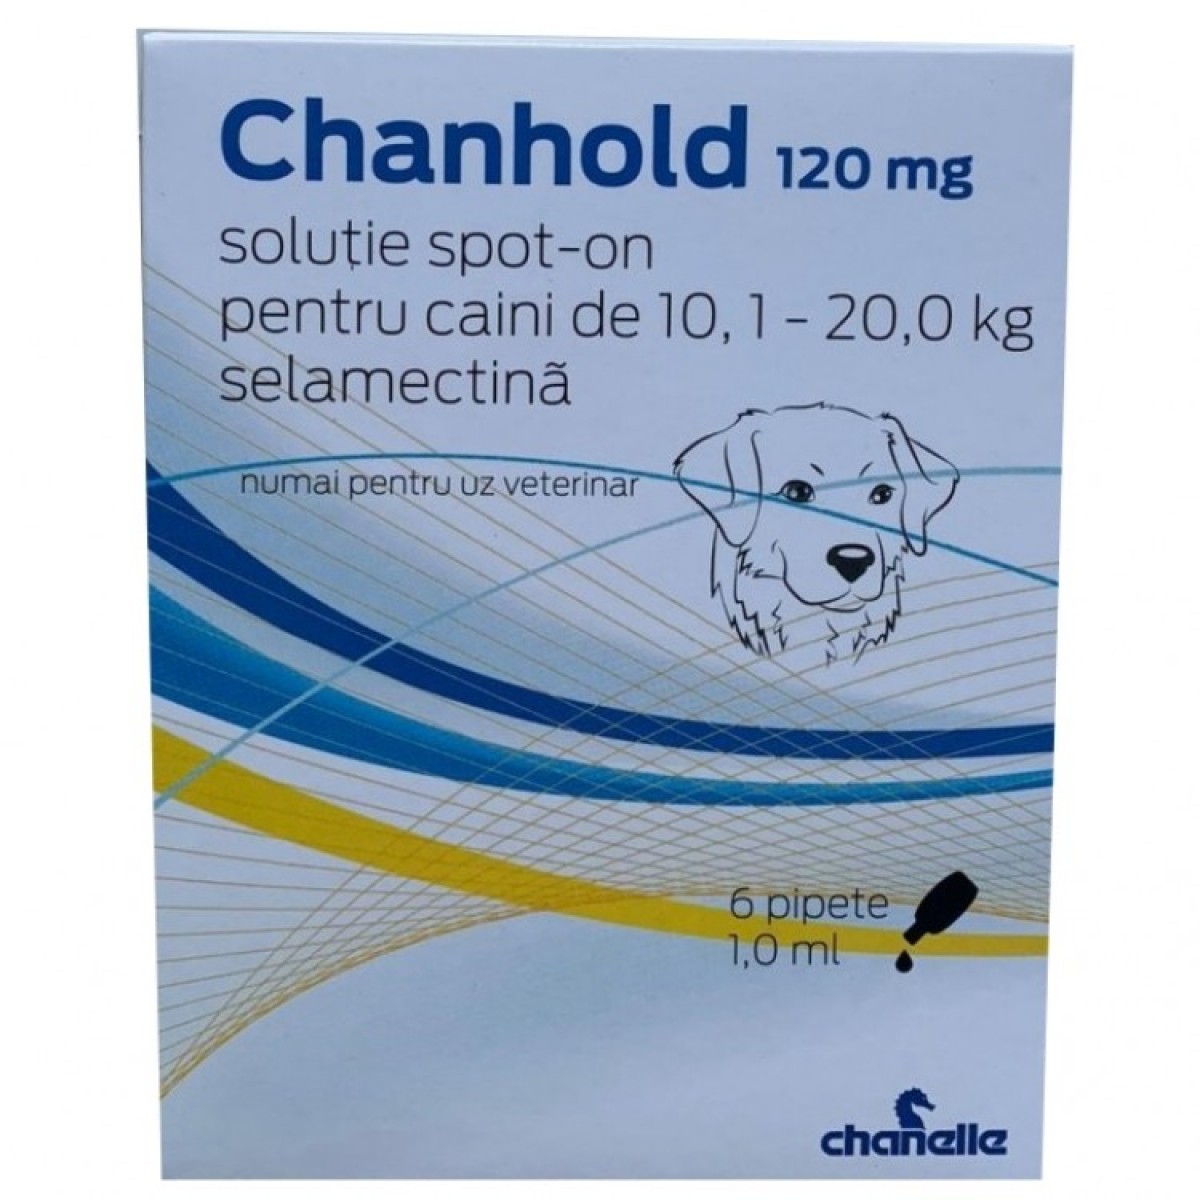 Pipetă antiparazitară Chanhold 120 mg pentru câini între 10 - 20 kg, Antiparazitare externe, Antiparazitare, Câini 